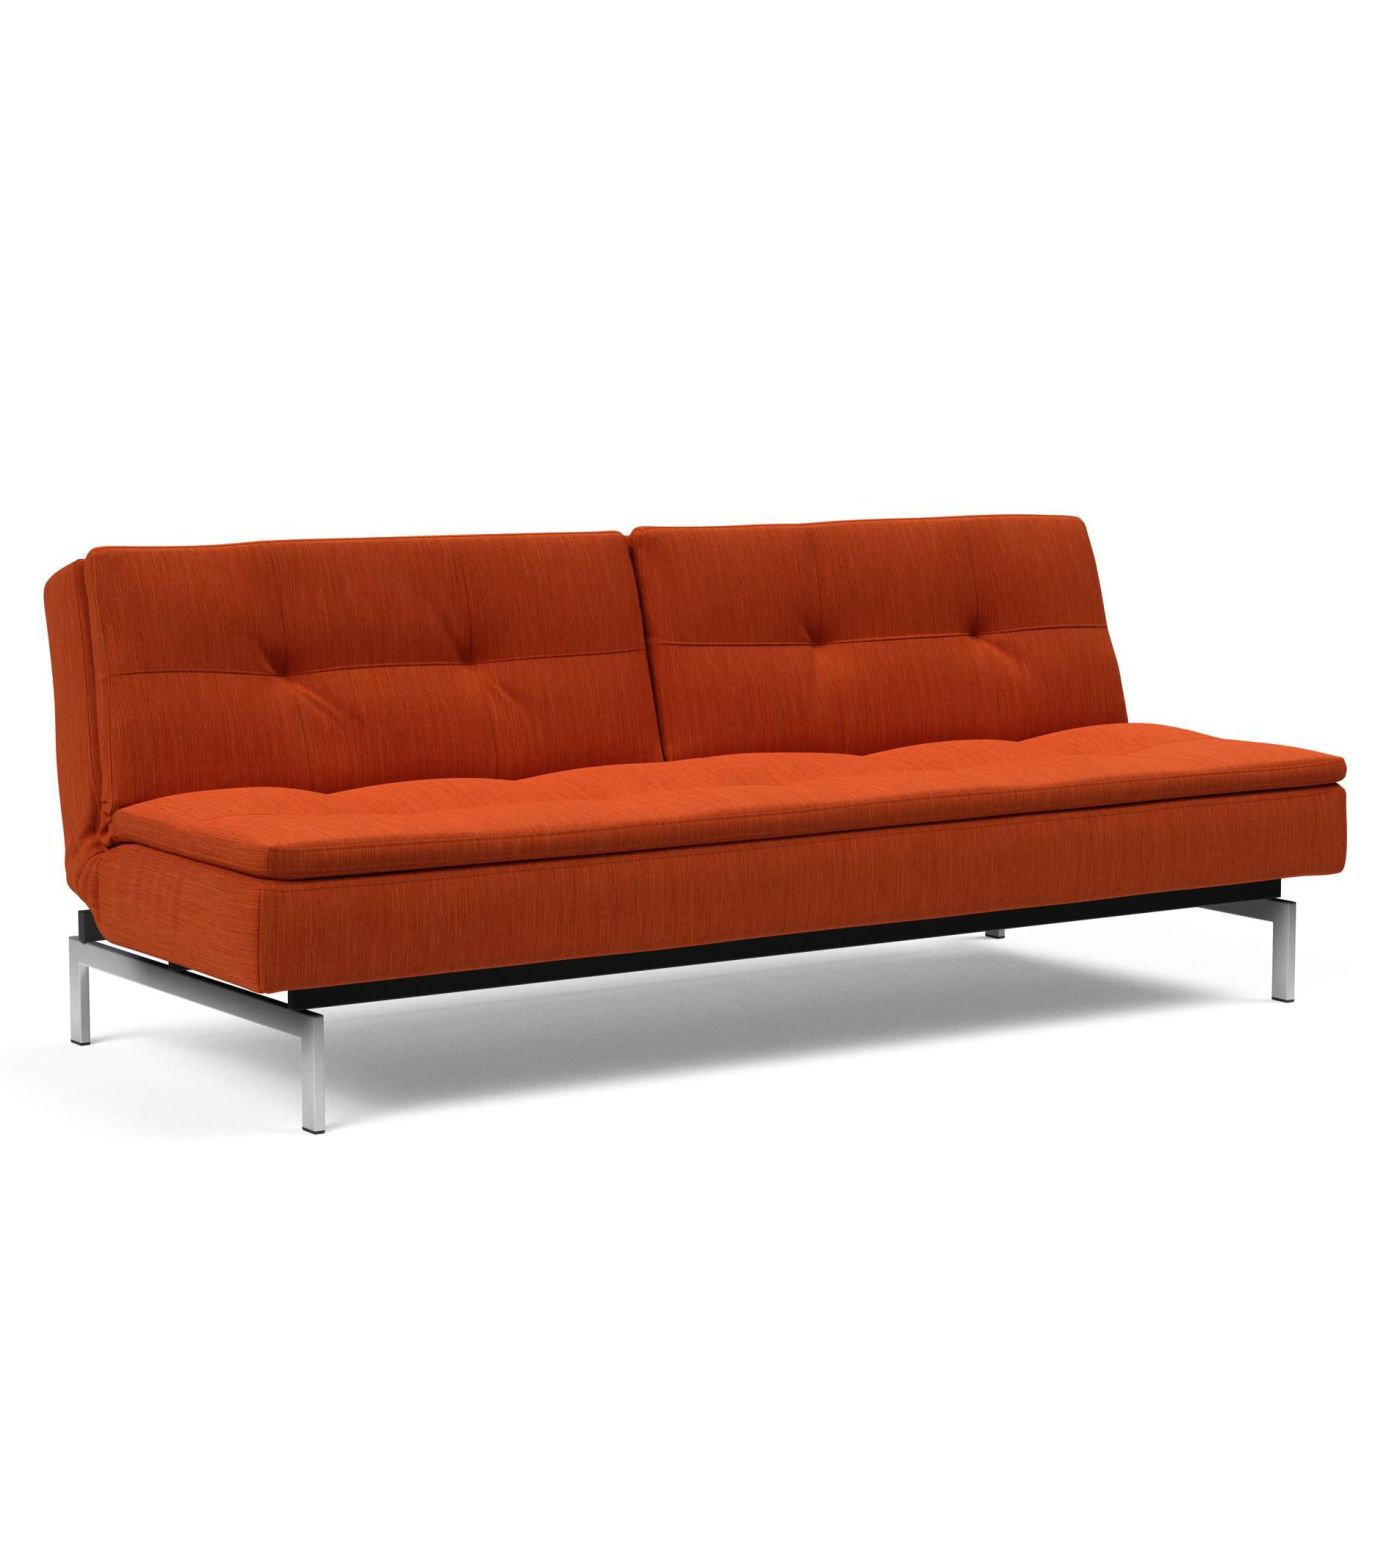 lighed liberal Fremkald Dublexo Stainless Steel Sofa Bed by Innovation Living | Modern Sofa Beds |  Cressina